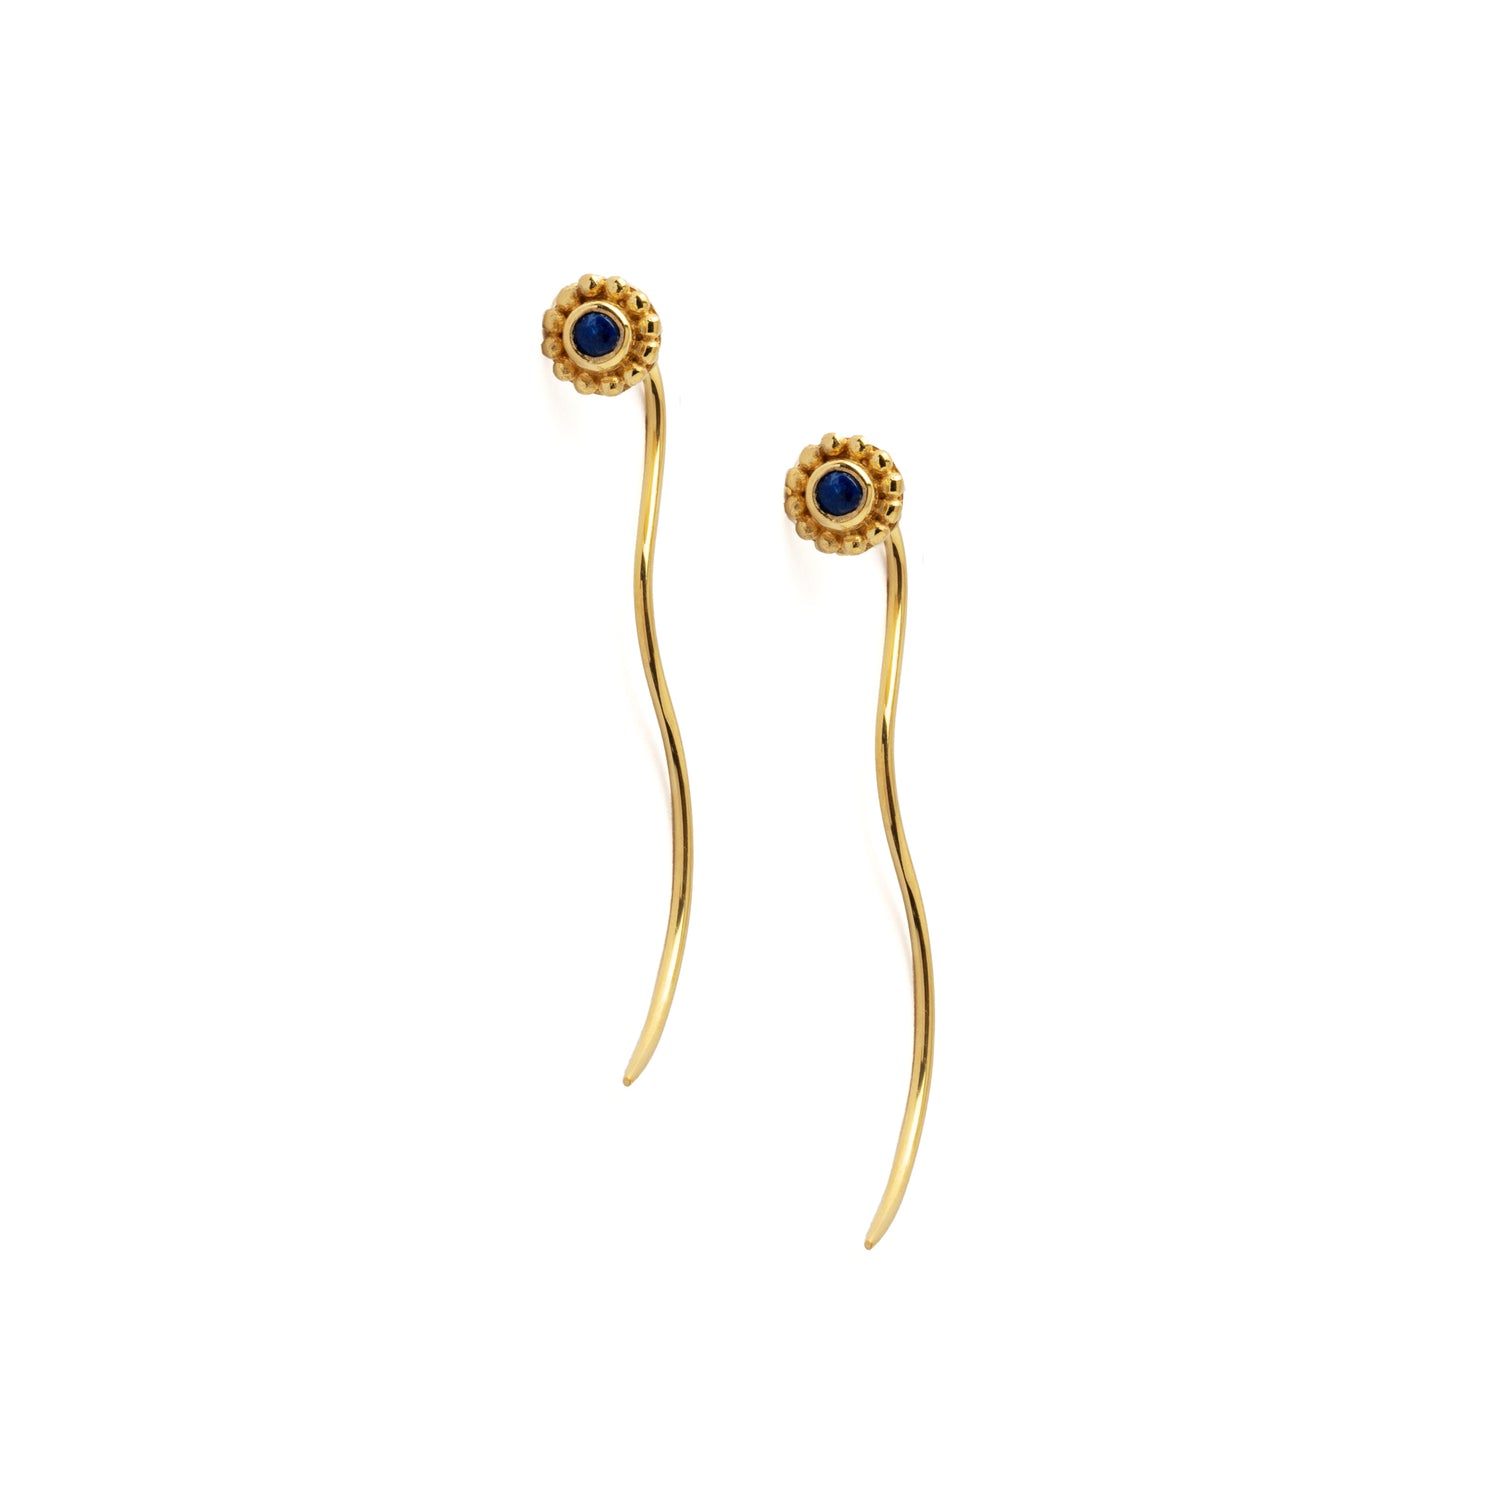 Gold Flower &amp; Lapis Stem Earrings frontal view